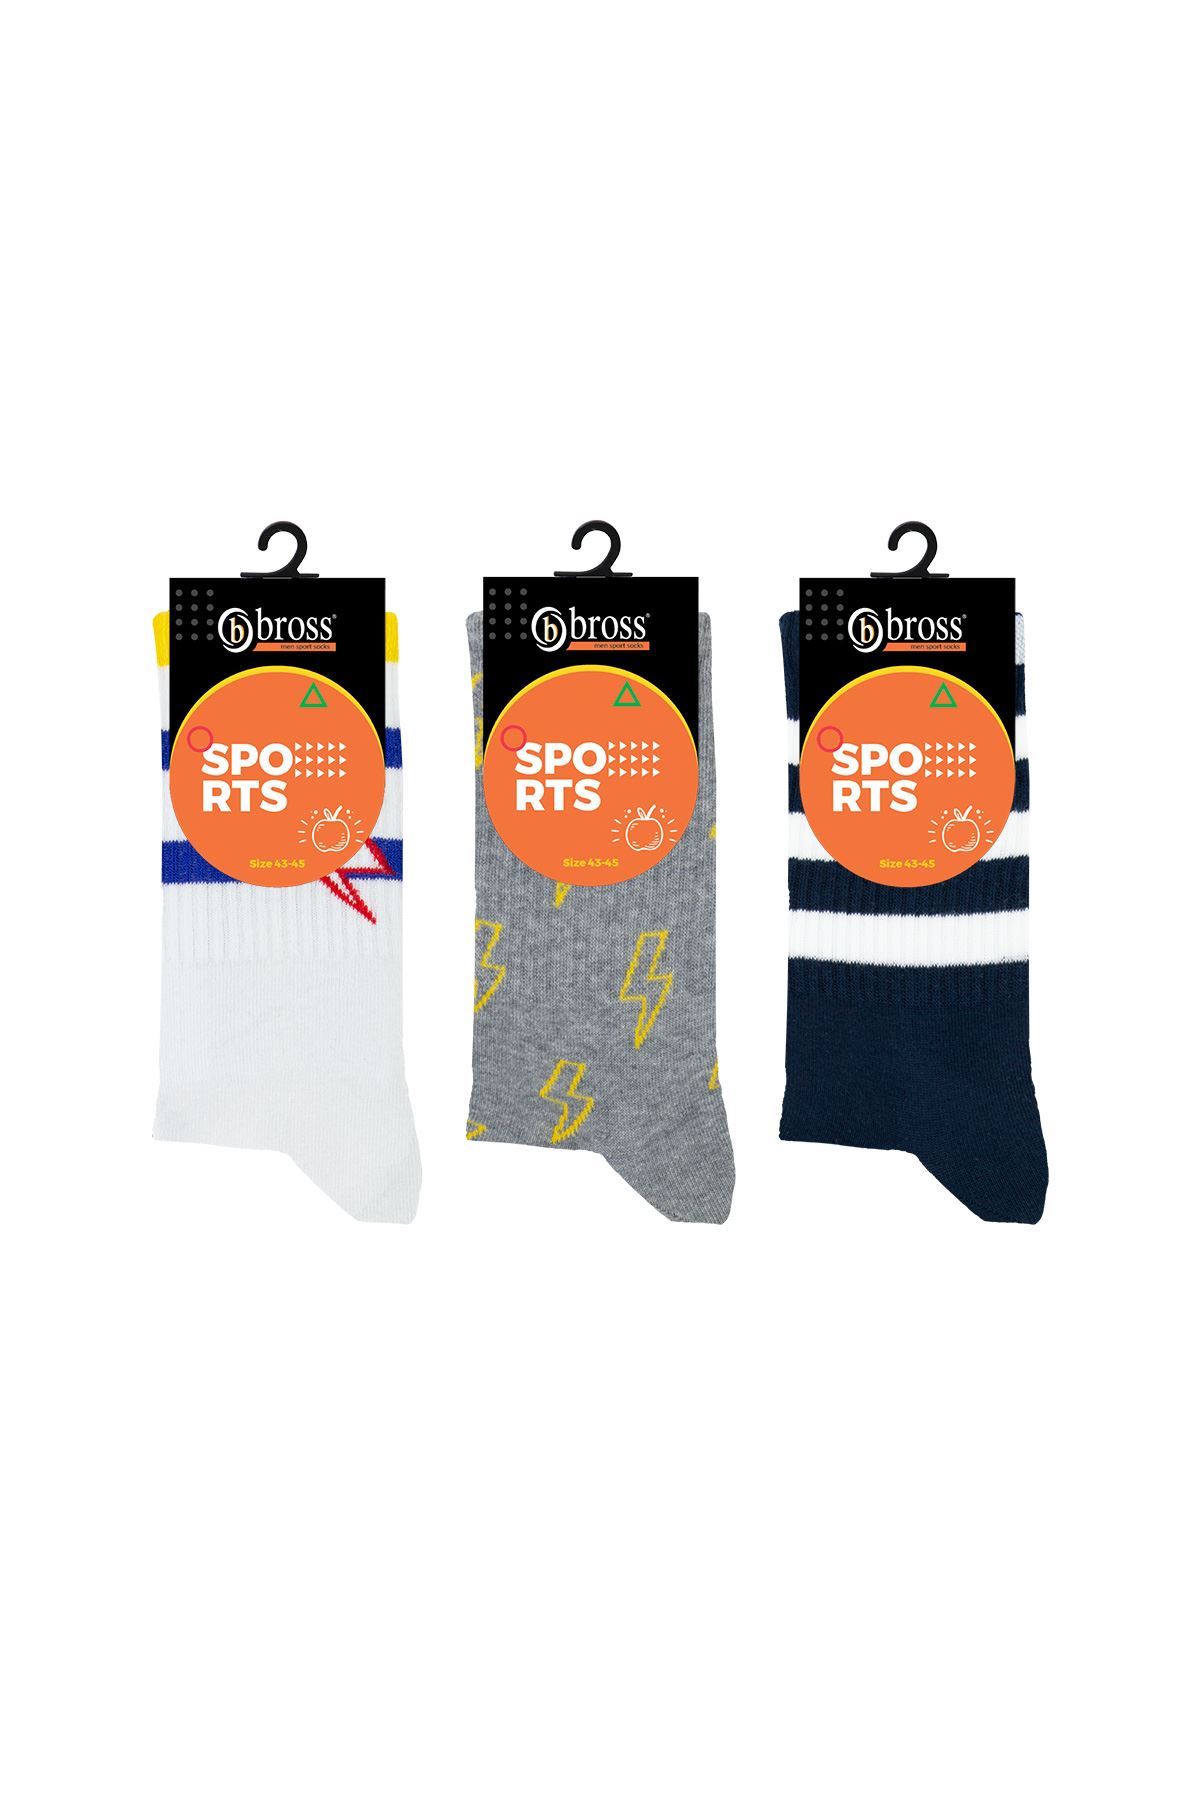 MAN MID-CALF SOCKS SPORT FLASH PATTERNED | Buy Branded Wholesale Socks ...